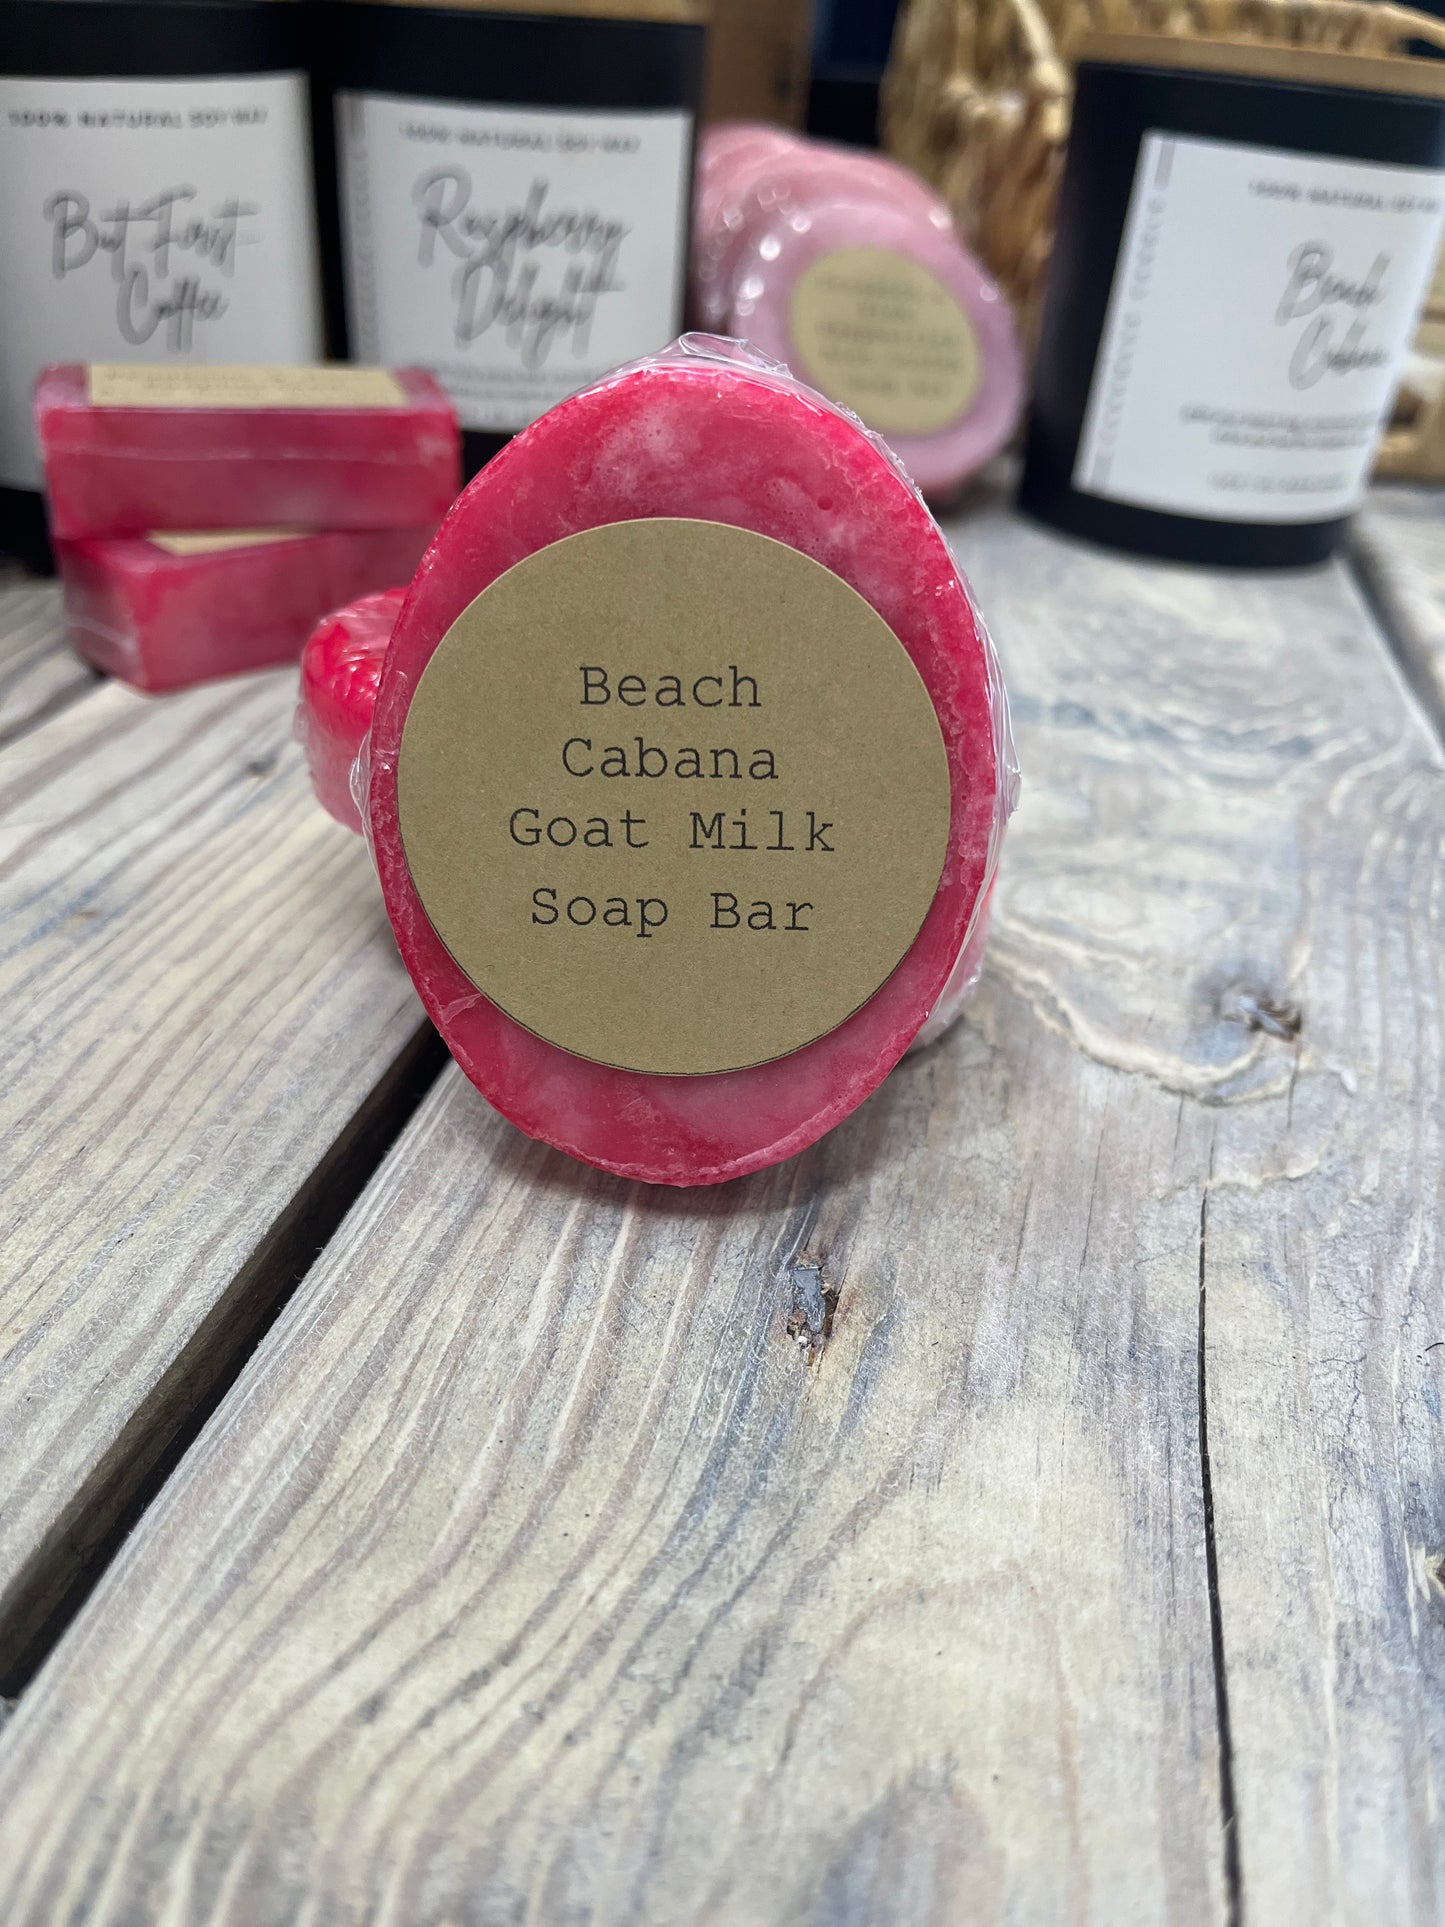 Goat Milk Soap Bars - Handmade in Michigan - Variety of Scents